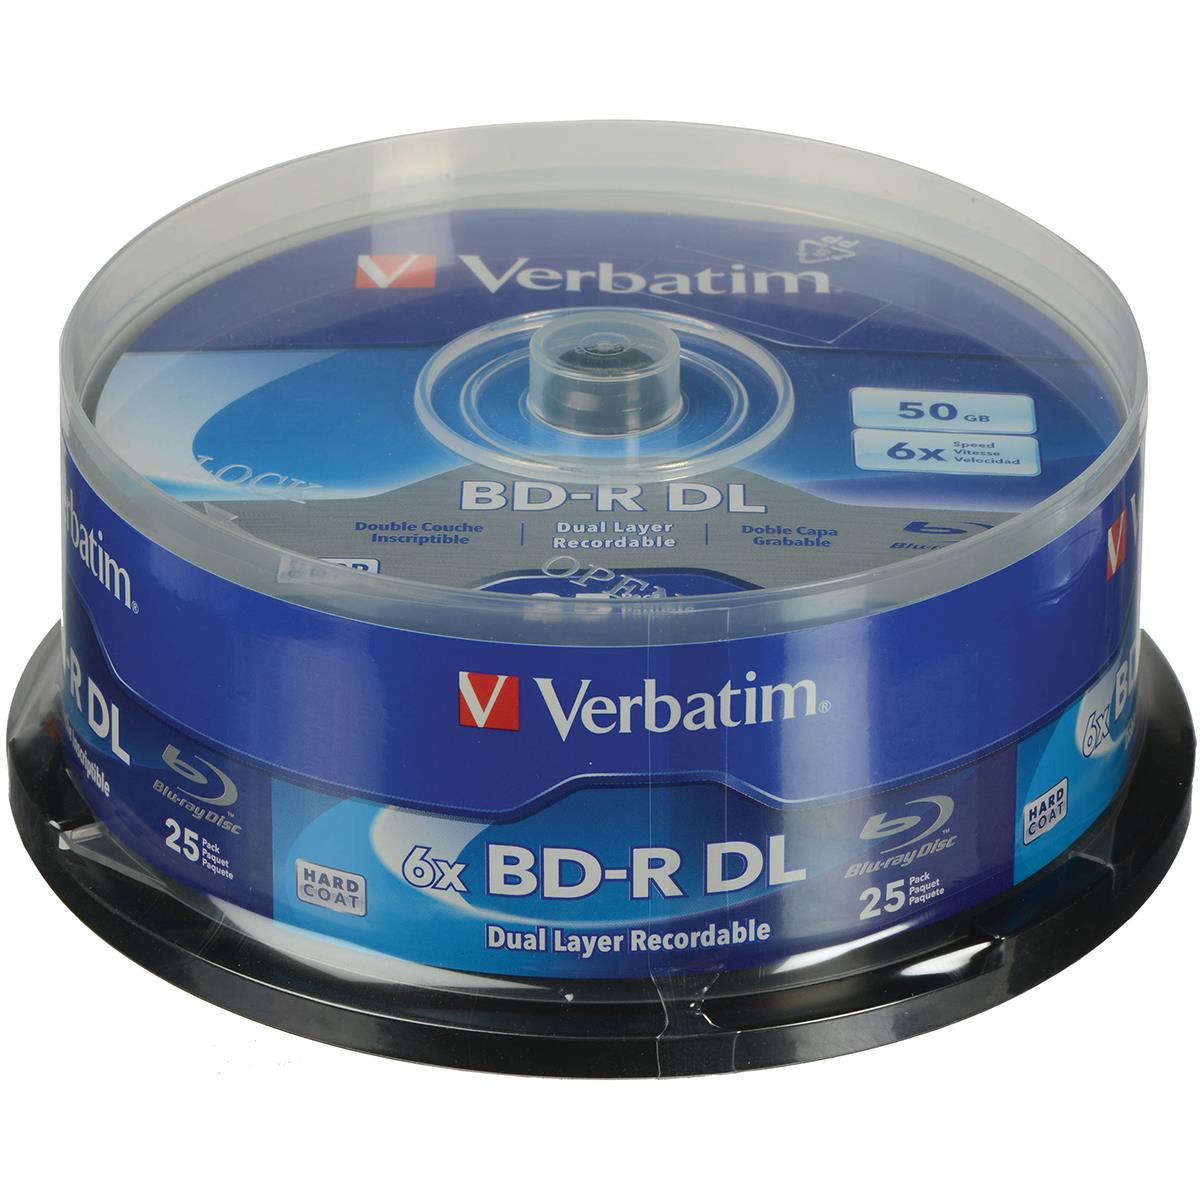 Image of Verbatim BD-R DL 50GB 8x Hard Coat Blu-Ray Recordable Disc